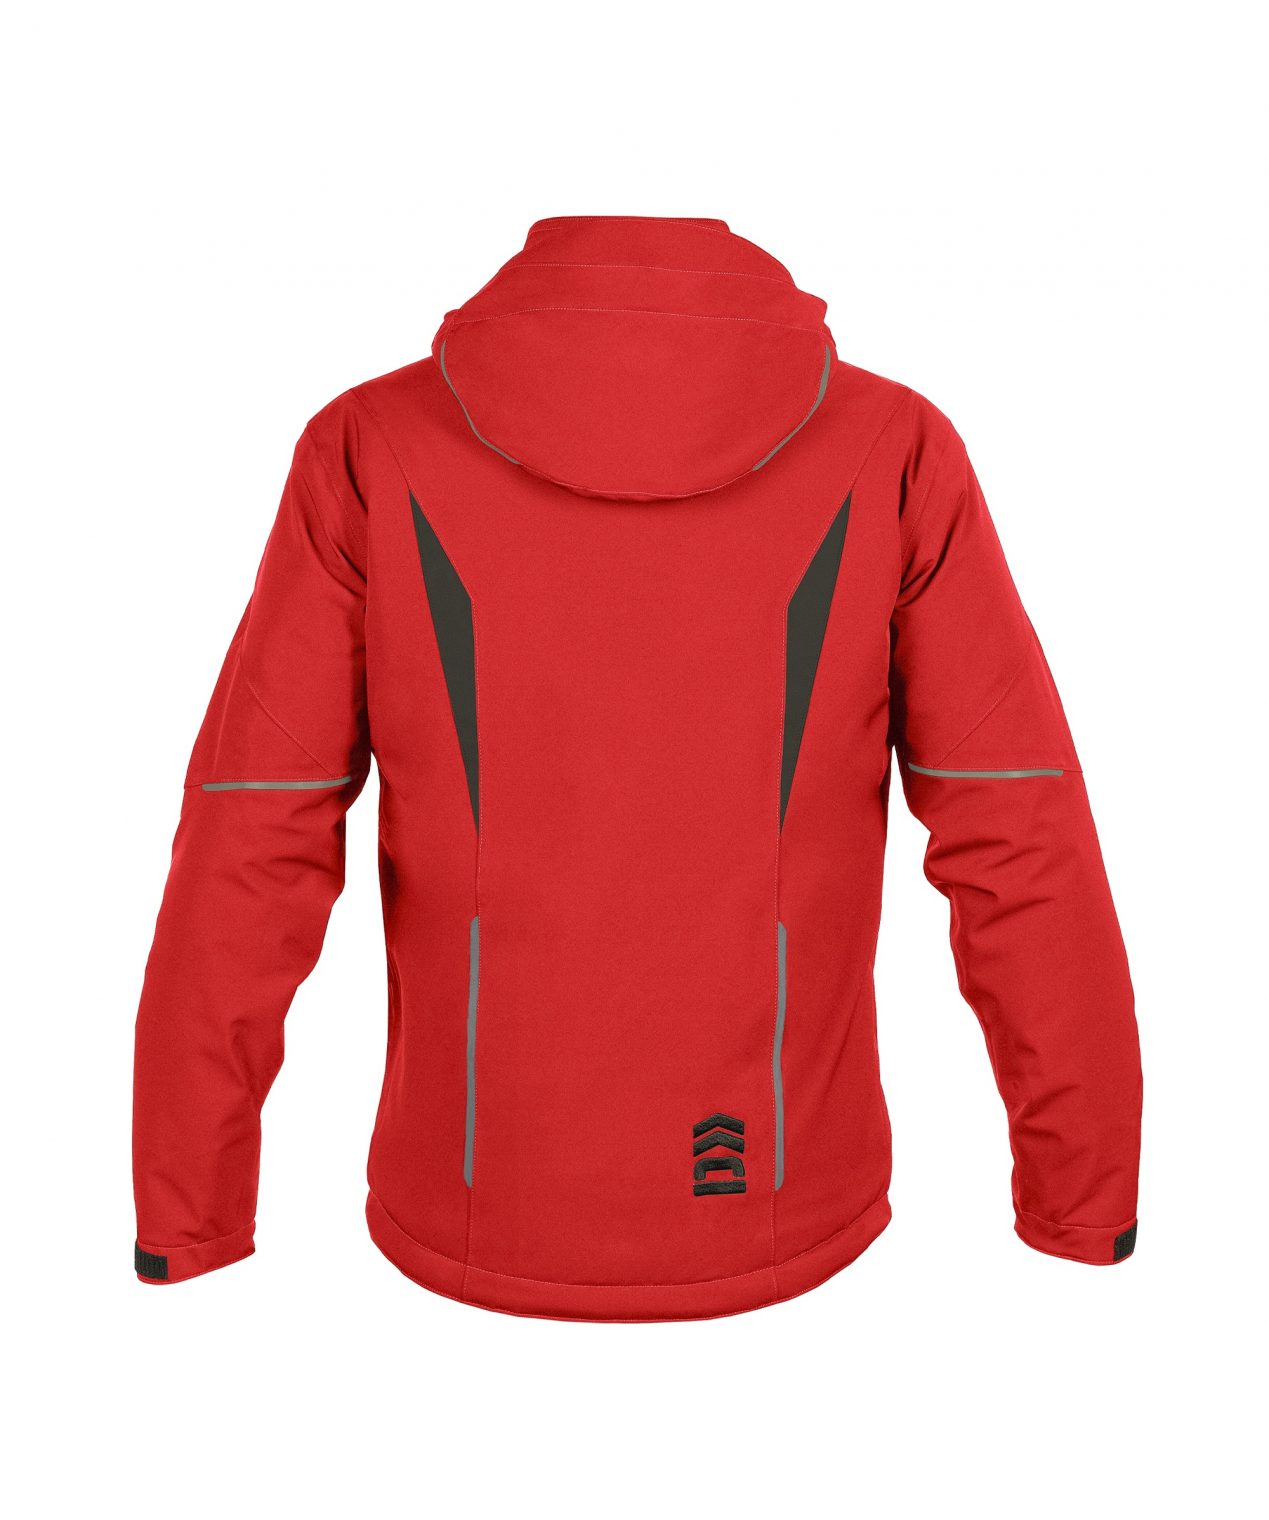 nordix stretch winter jacket red back